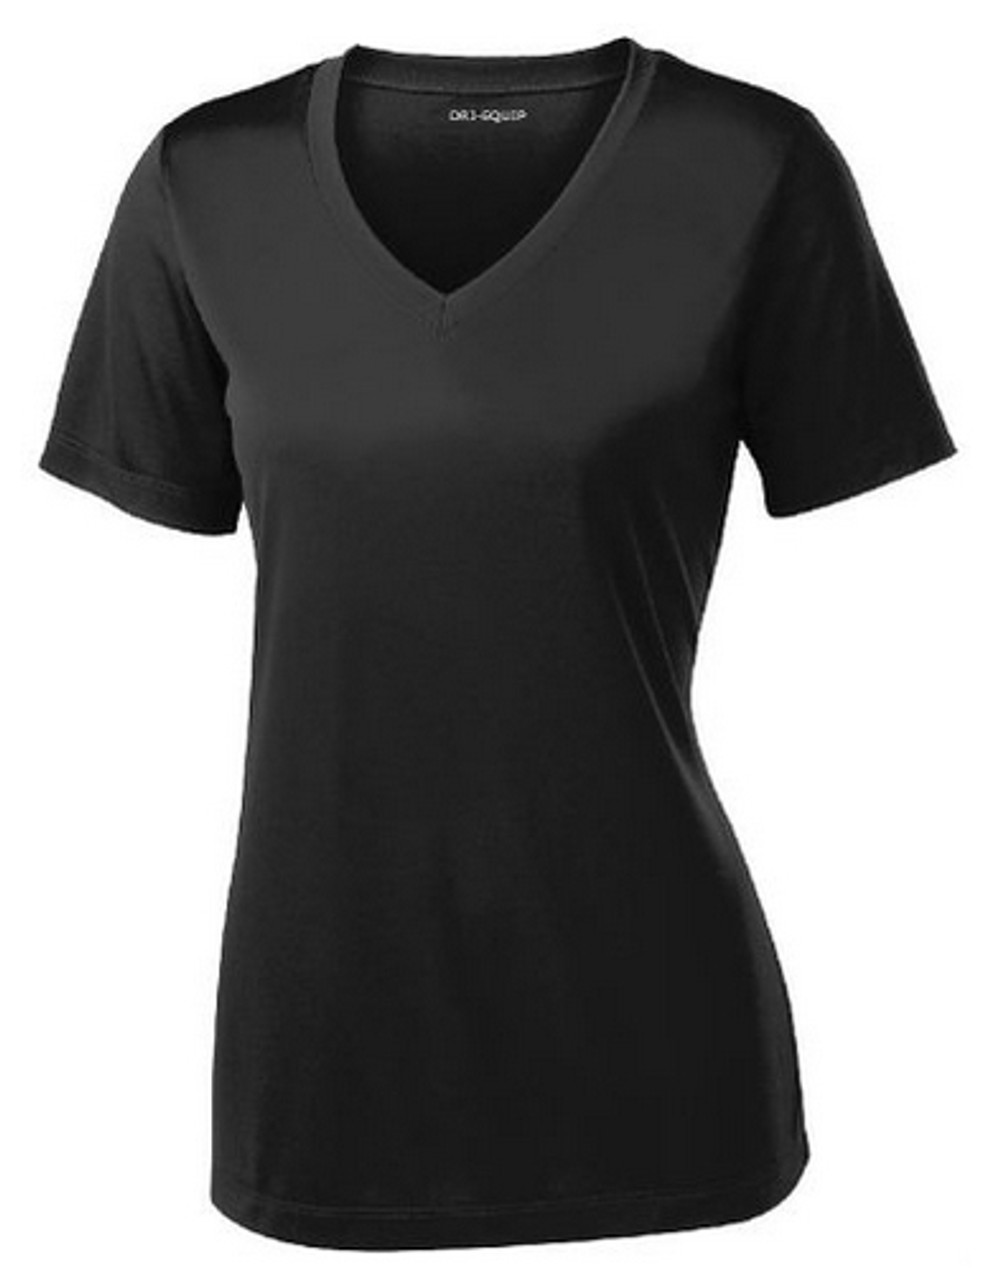 Black Ladies Short Sleeve V-Neck Moisture Wicking Athletic T-Shirt